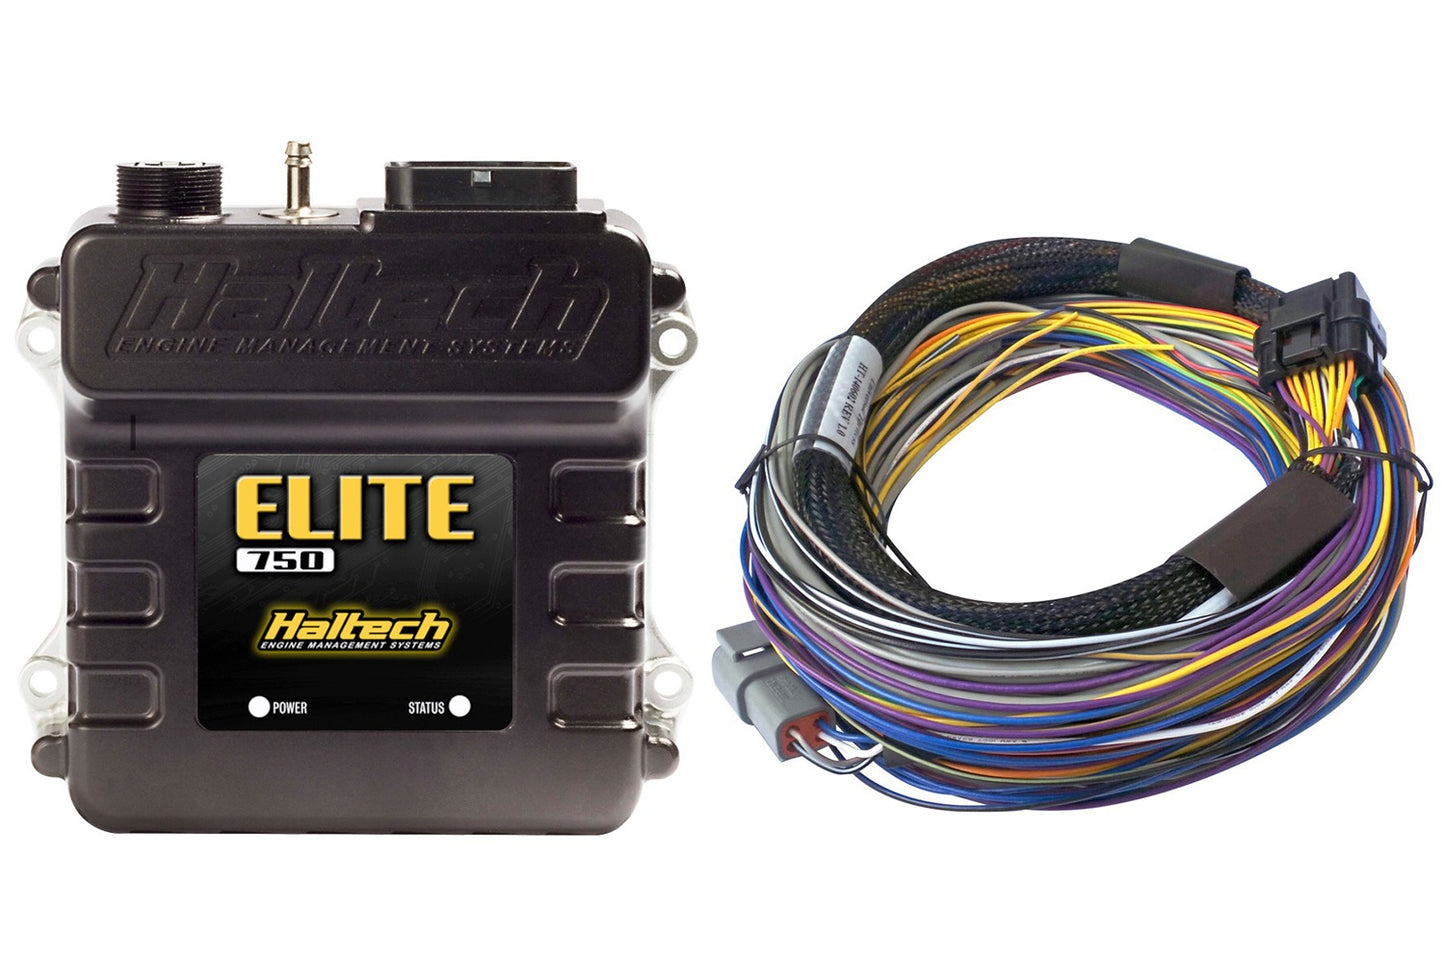 Haltech Elite 750 - Engine Management System